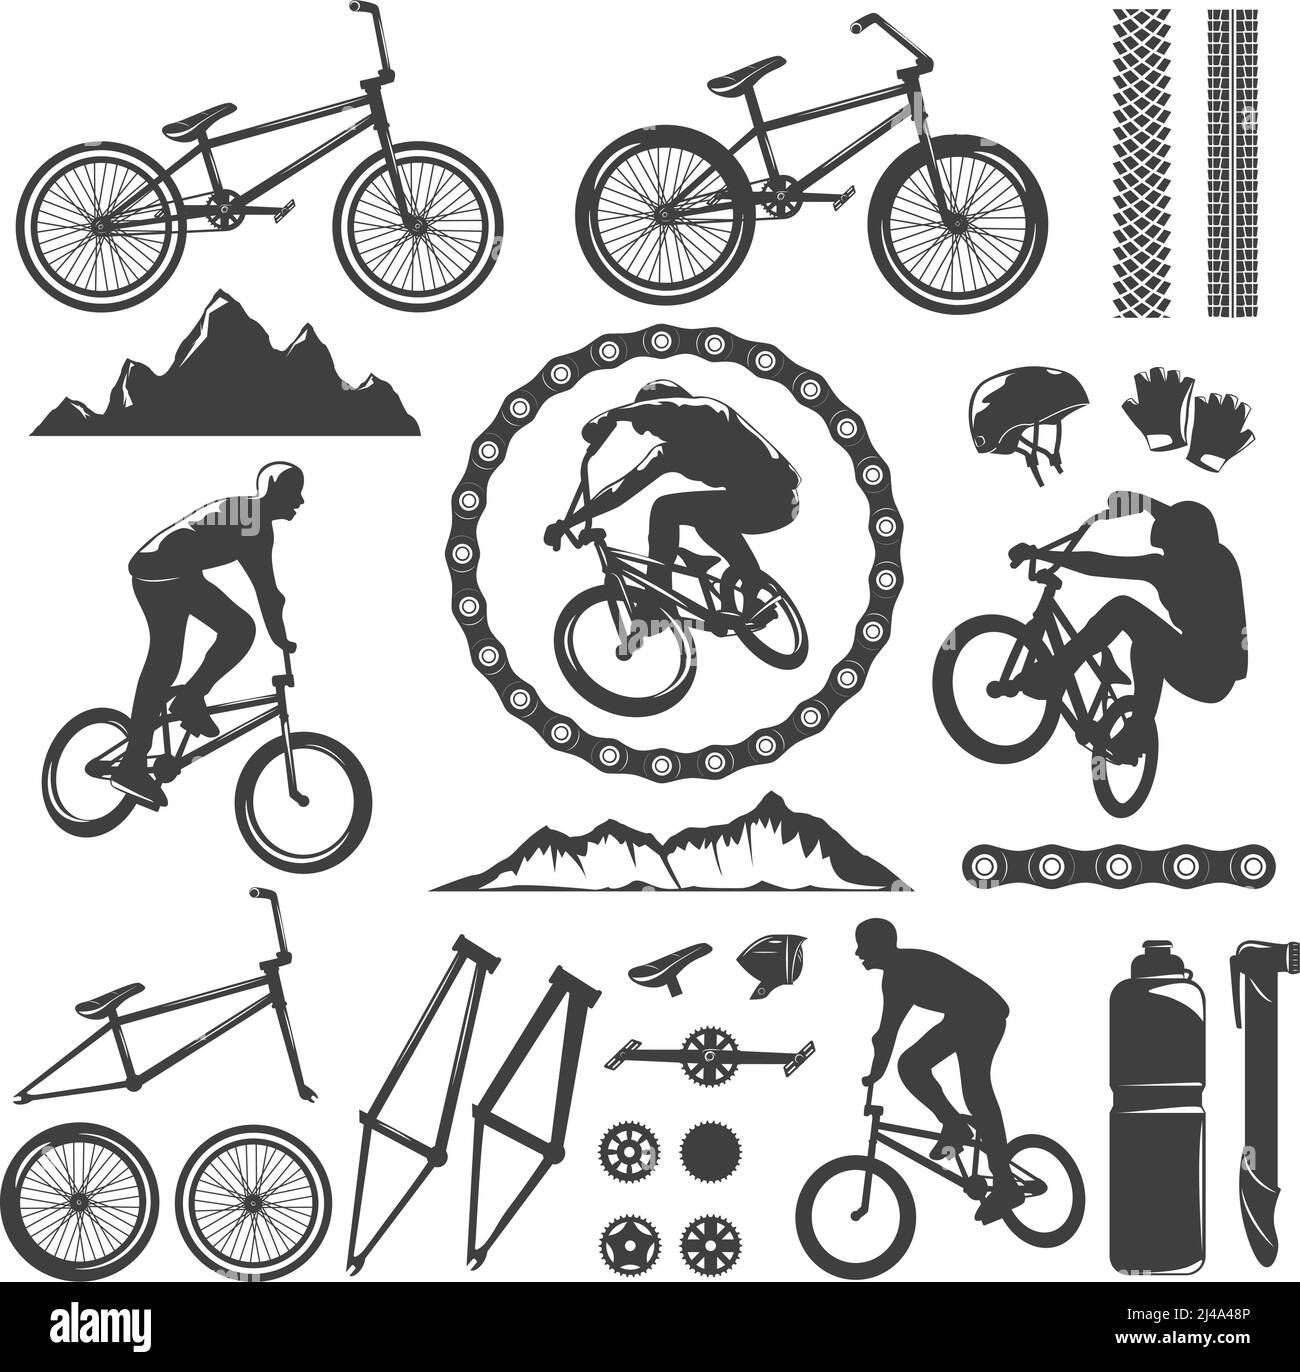 BMX dekorative Grafik-Icons Set mit Fahrrad-Fahrradkettenrahmen Pedal Rock Track Helm isoliert Vektor Illustration Stock Vektor